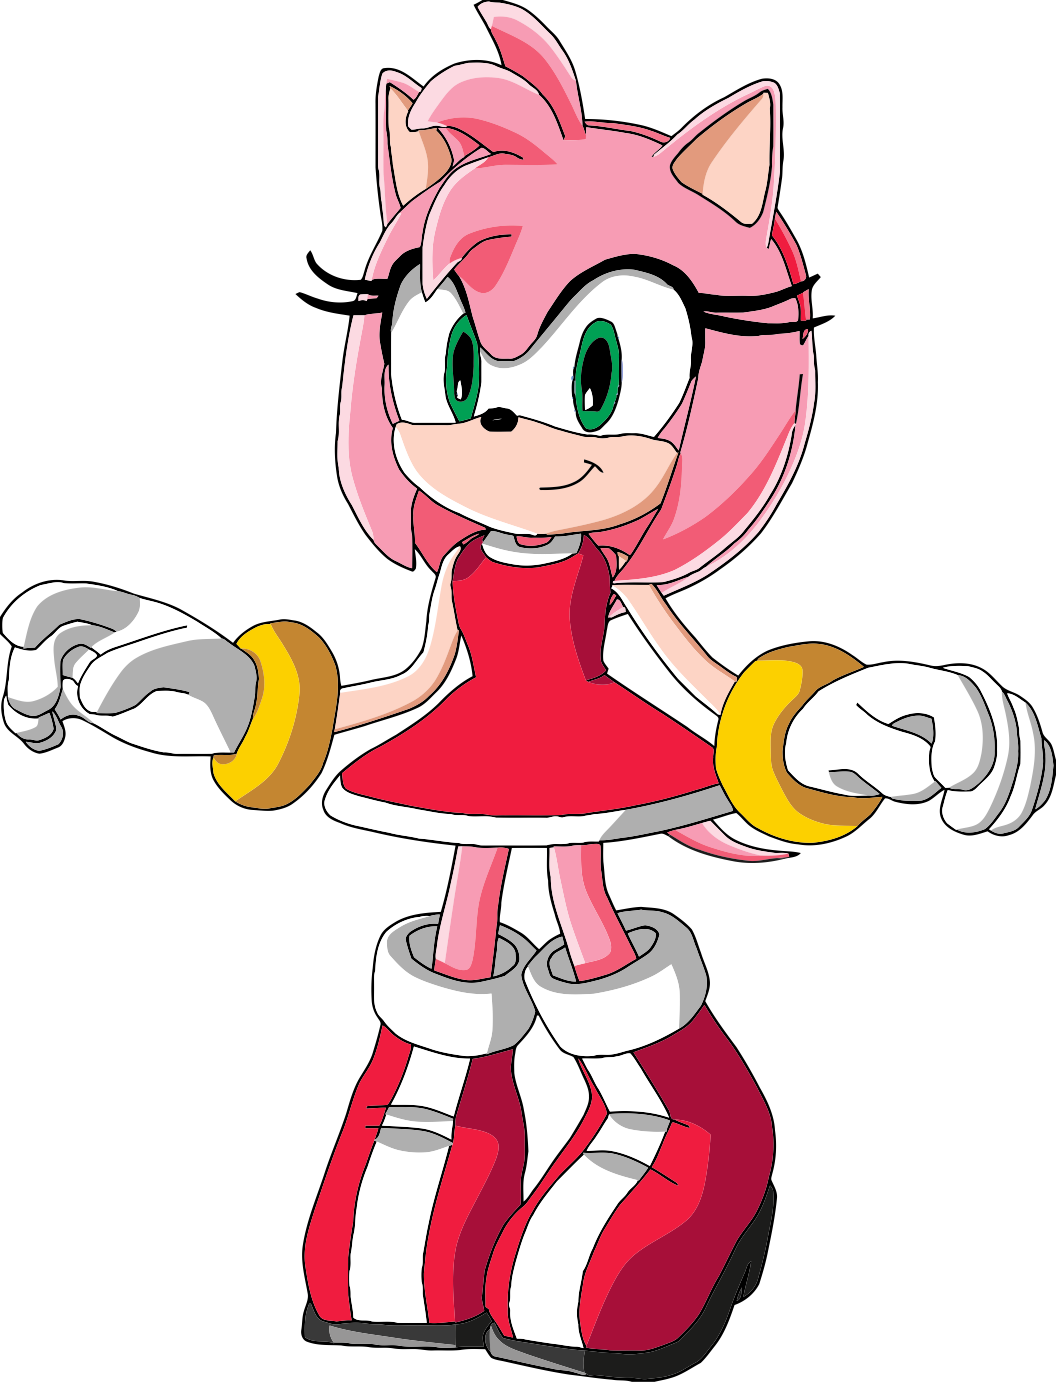 Amy Rose Full Art Amy Rose De Sonic The Hedgehog Png Klipartz | Images ...